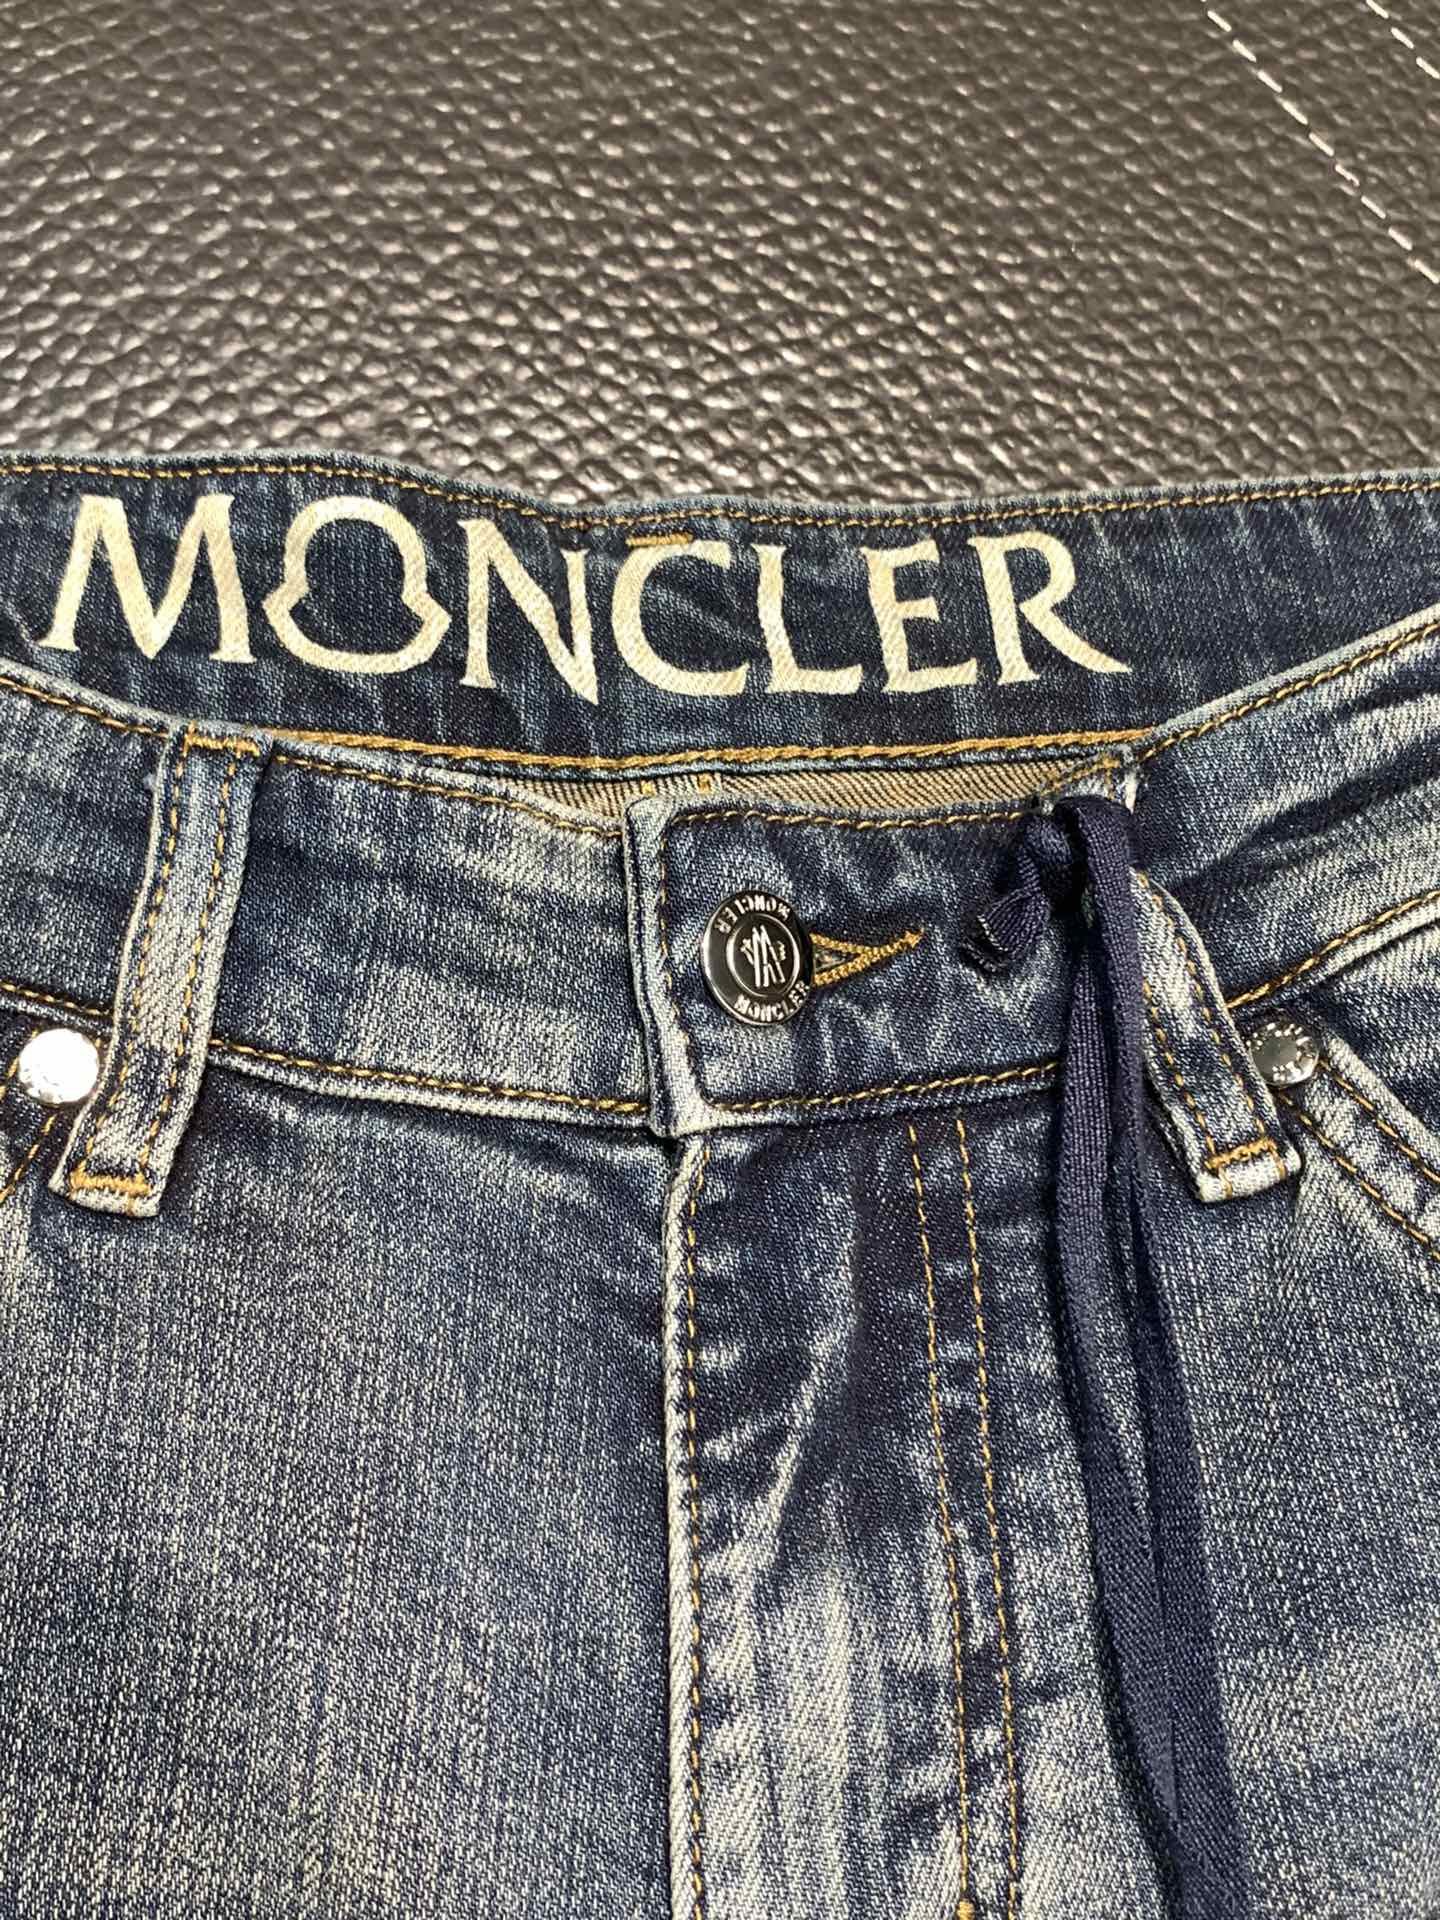 Moncler蒙口独家专供新款休闲牛仔裤高端版本专柜定制面料透气舒适度高细节无可挑剔品牌元素设计理念体现